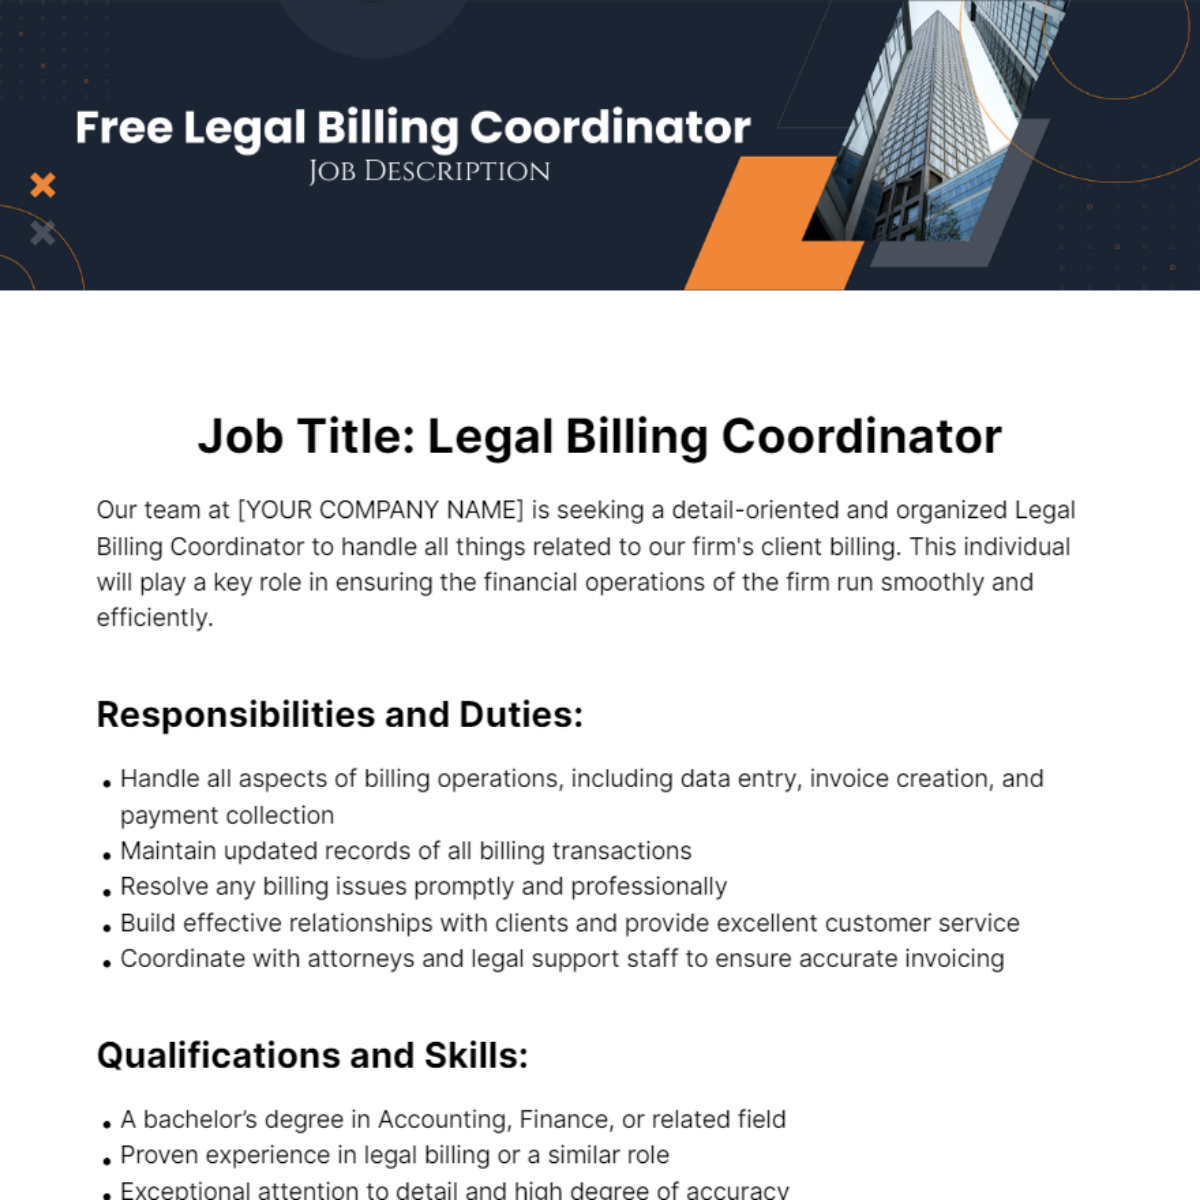 Free Legal Billing Coordinator Job Description Template